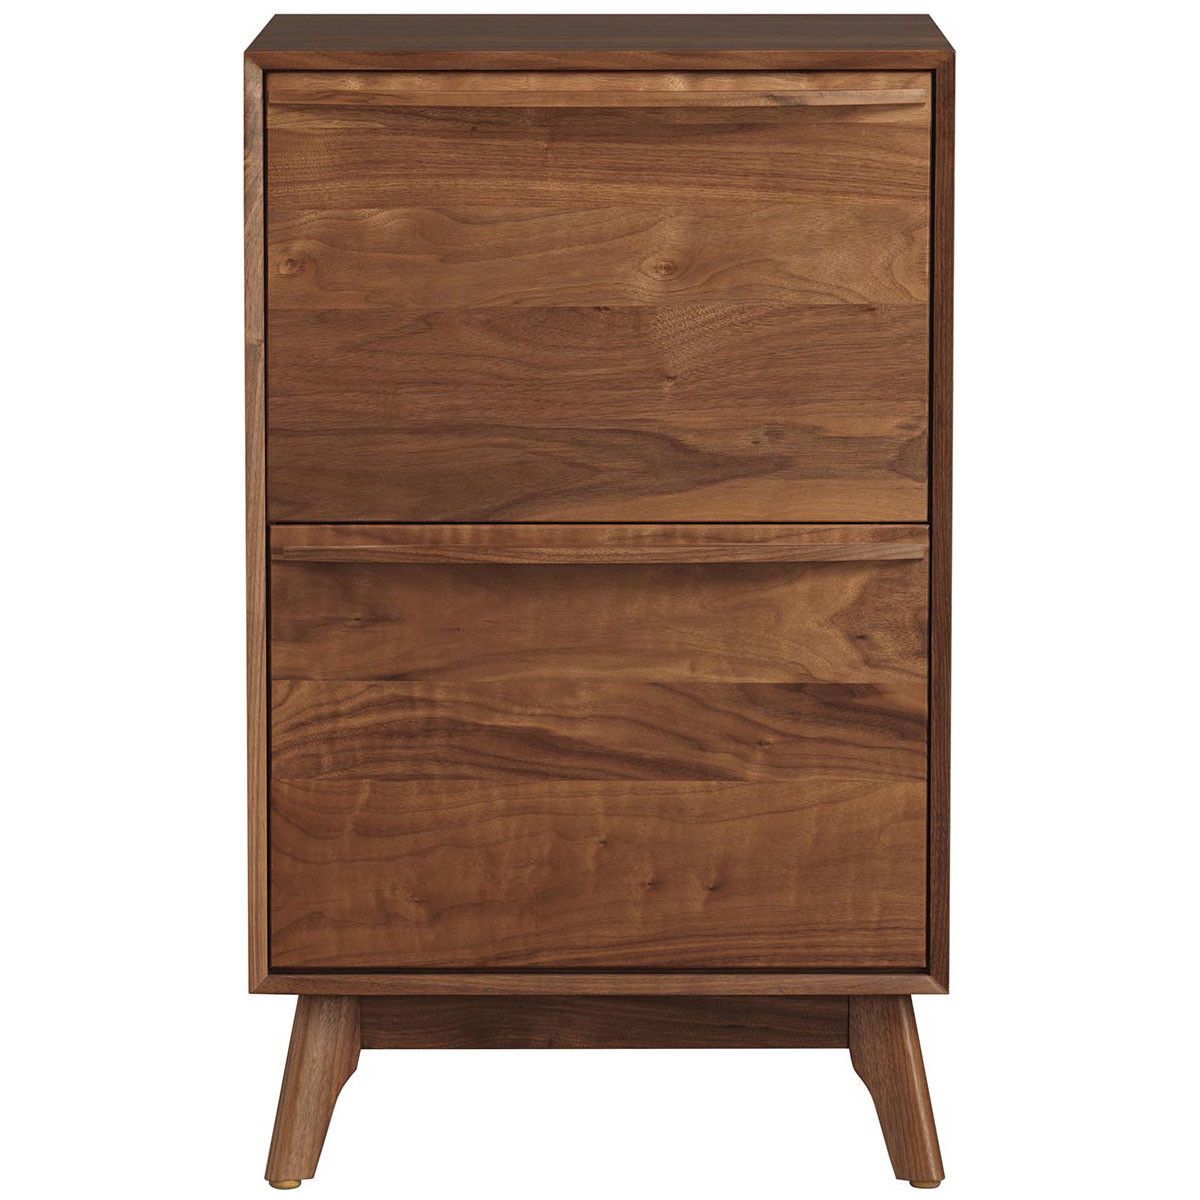 walnut filing cabinet elegant copeland furniture catalina home fice narrow file